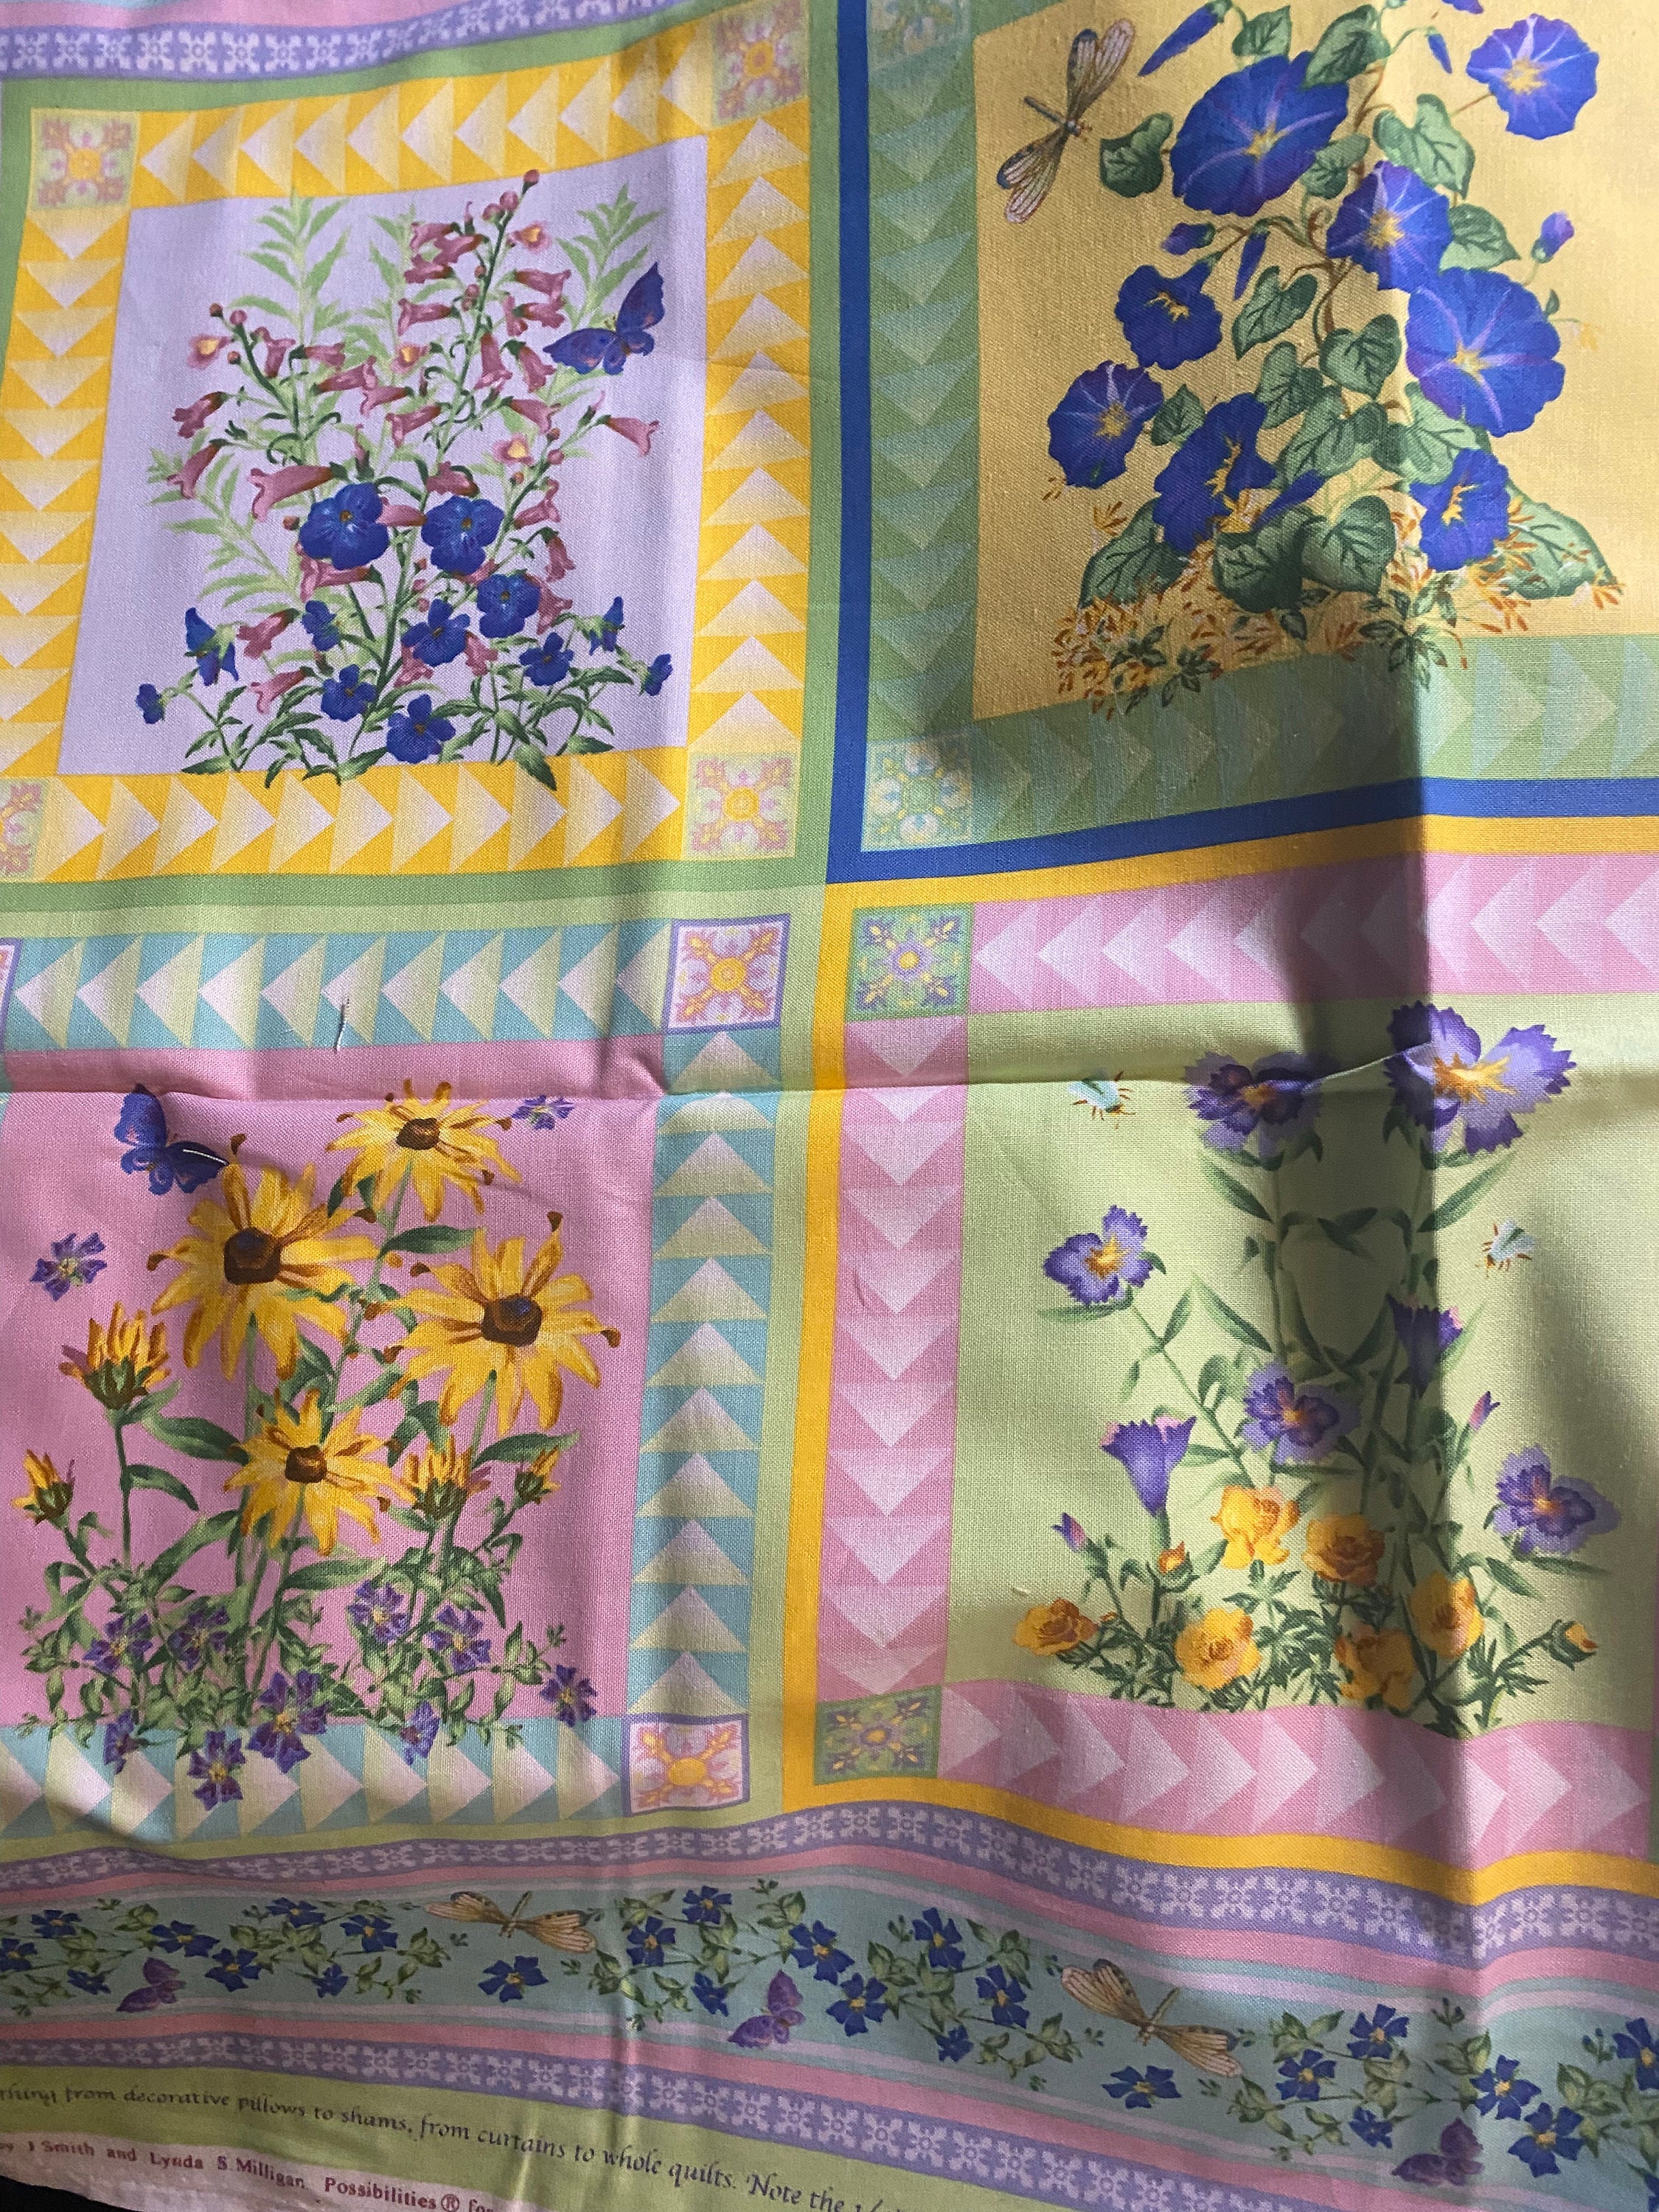 Flower Tiles Fabric PANEL Nancy Smith / Lynda Milligan - Etsy